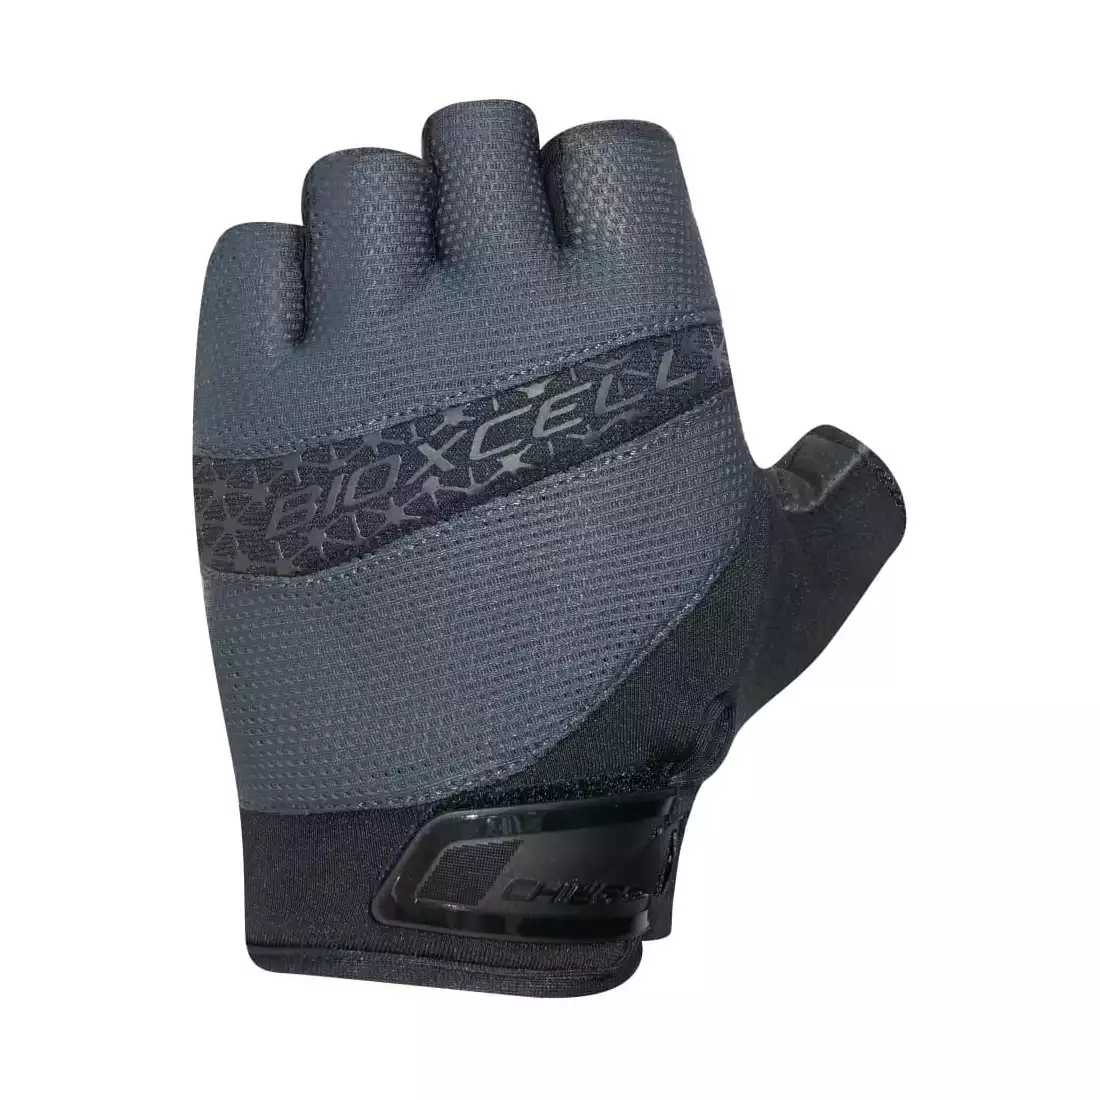 CHIBA BIOXCELL PRO cycling gloves, Gray